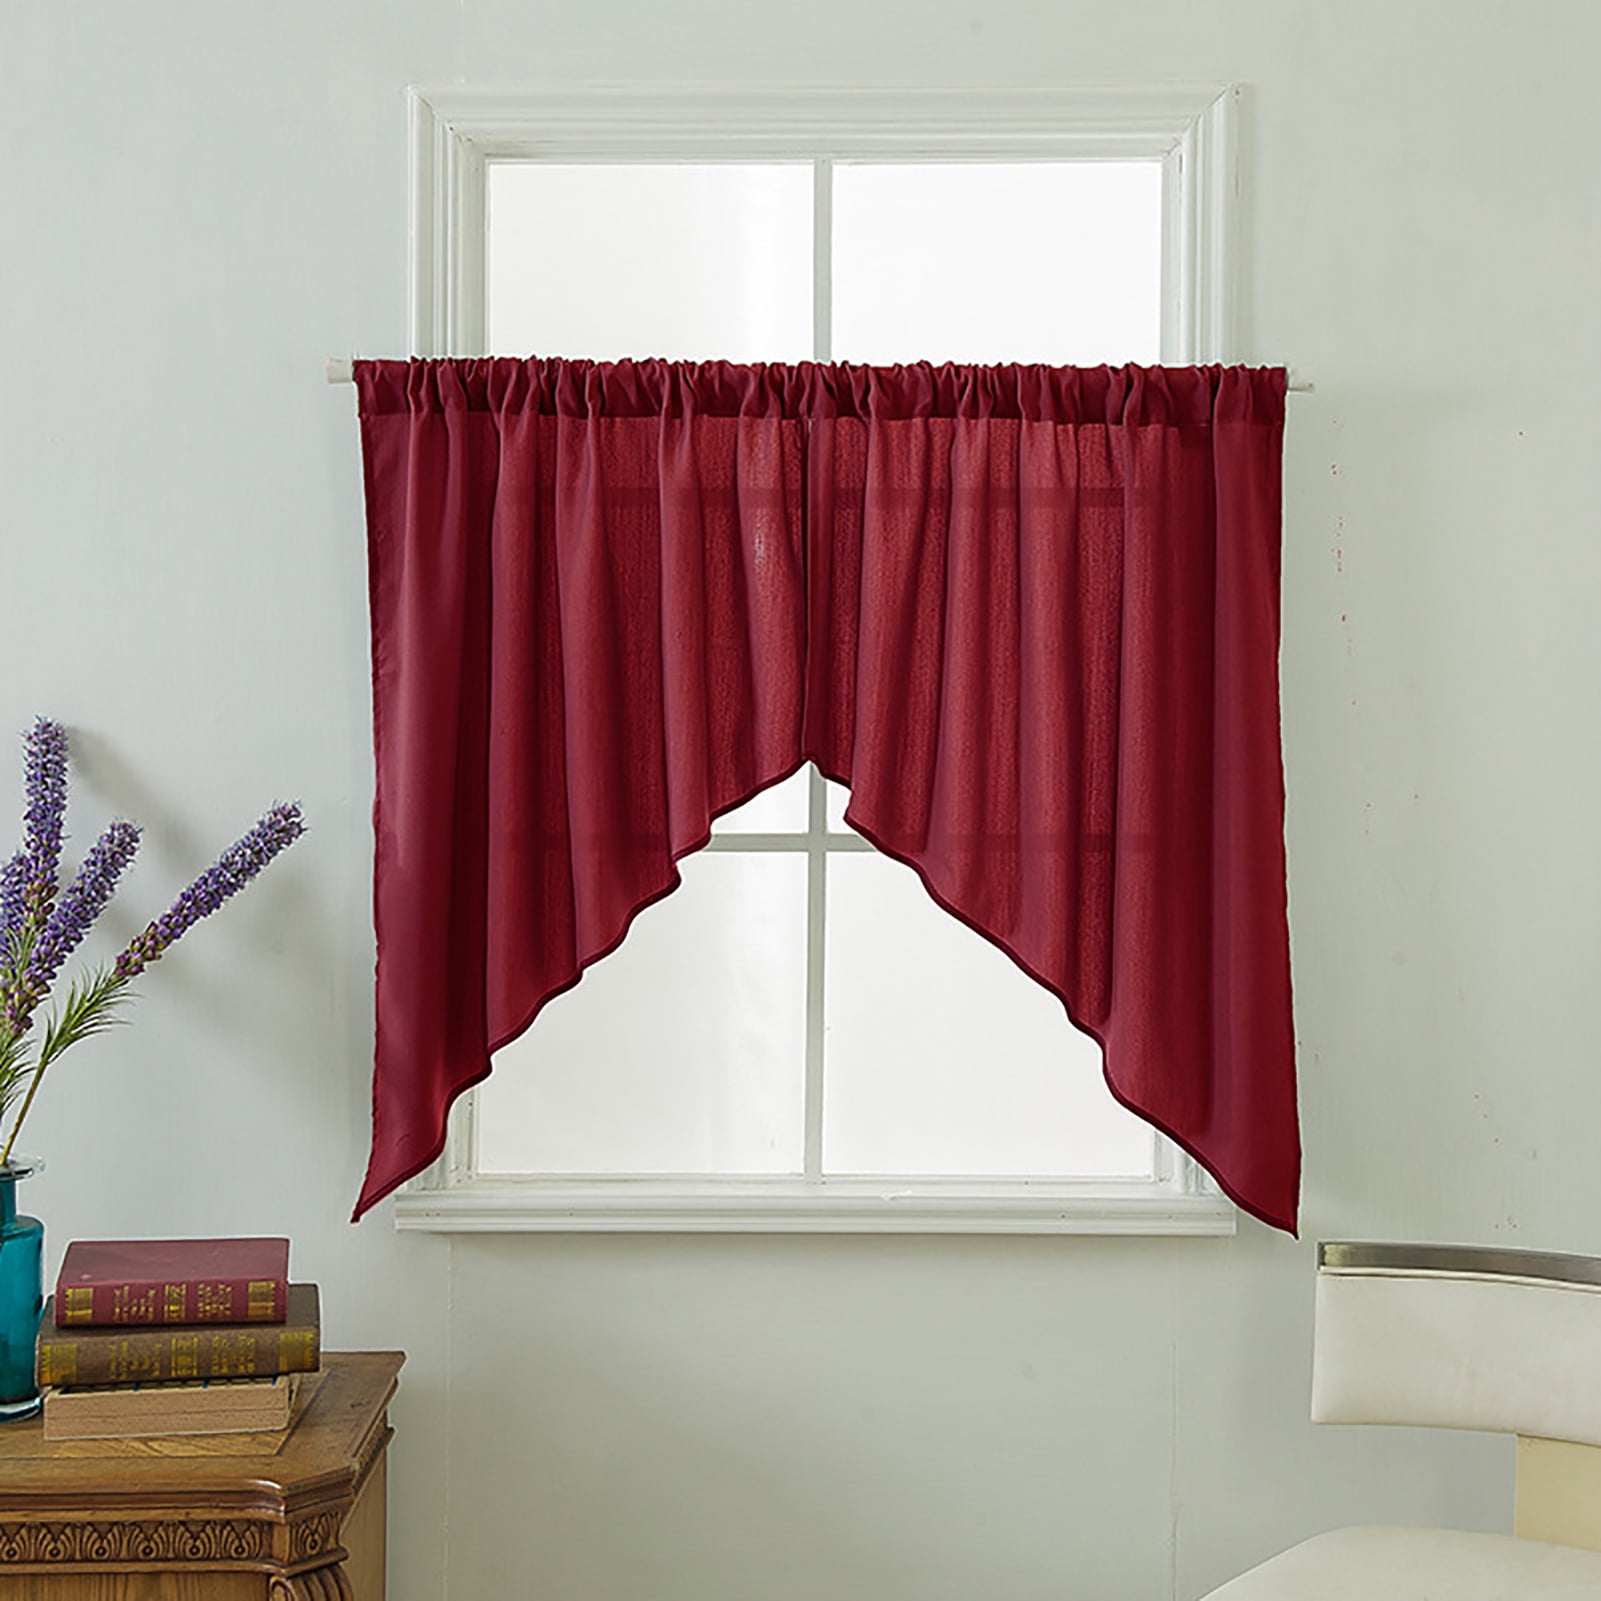 Triangle Kitchen Short Curtain Window Valance Drape Home Decor Solid Flexible 